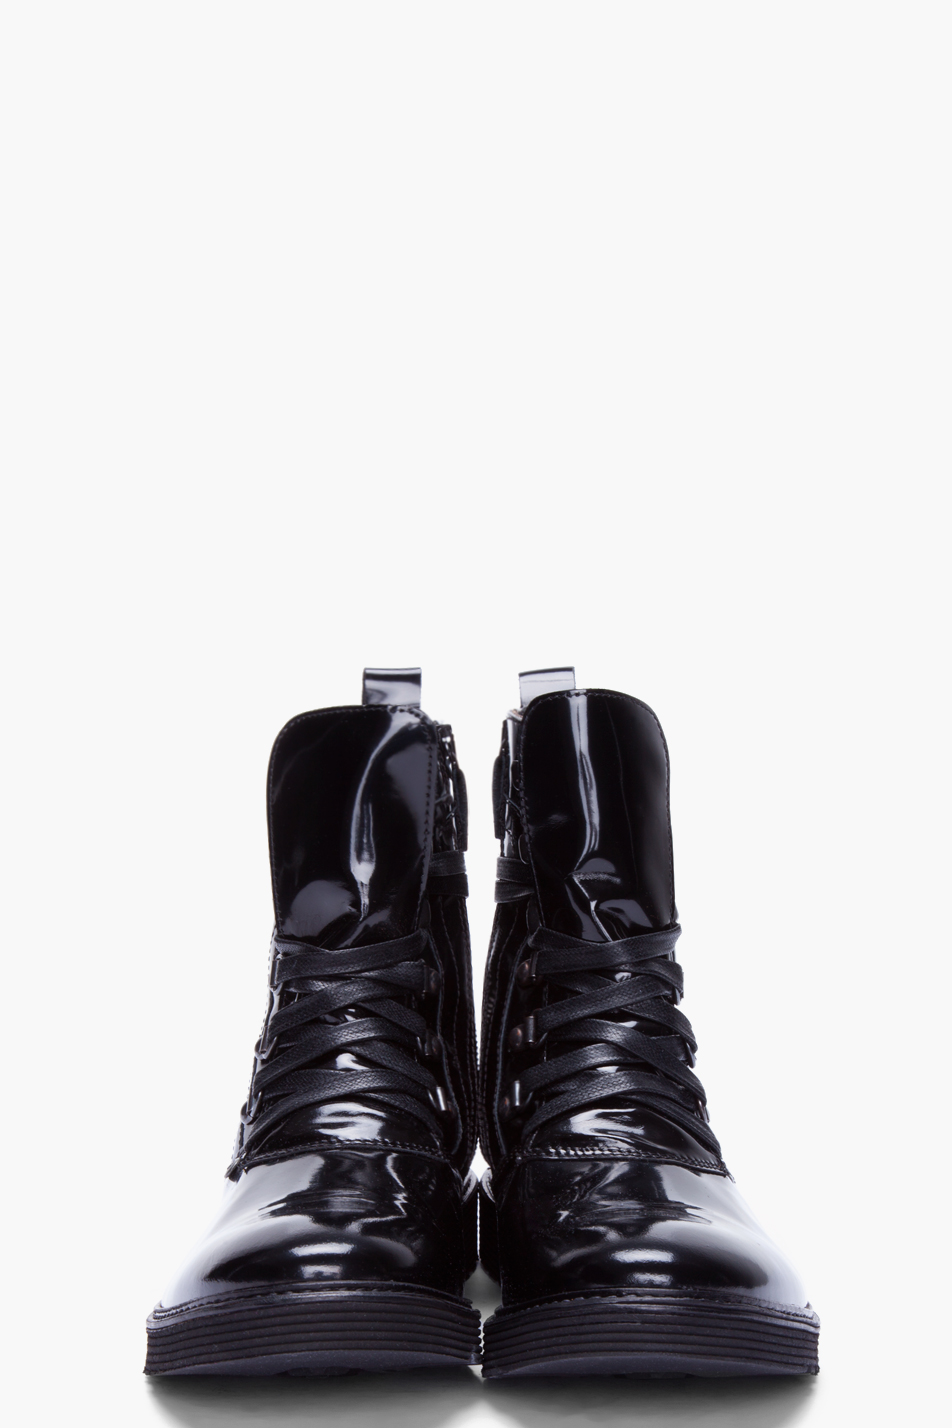 McQ Black Patent Leather Combat Boots for Men - Lyst